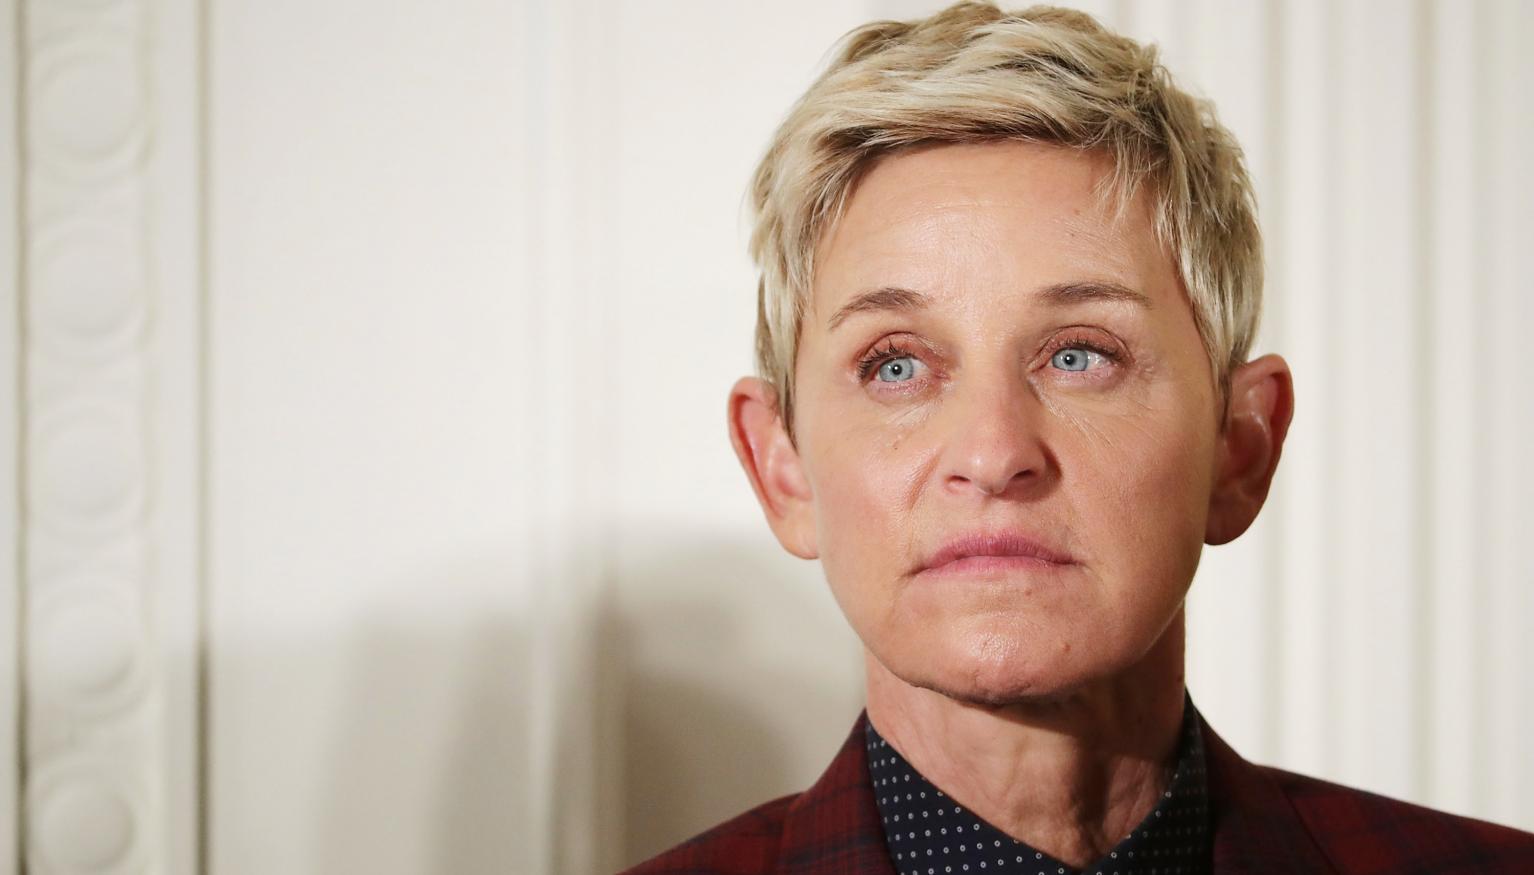 Ellen DeGeneres’ New Fashion Line